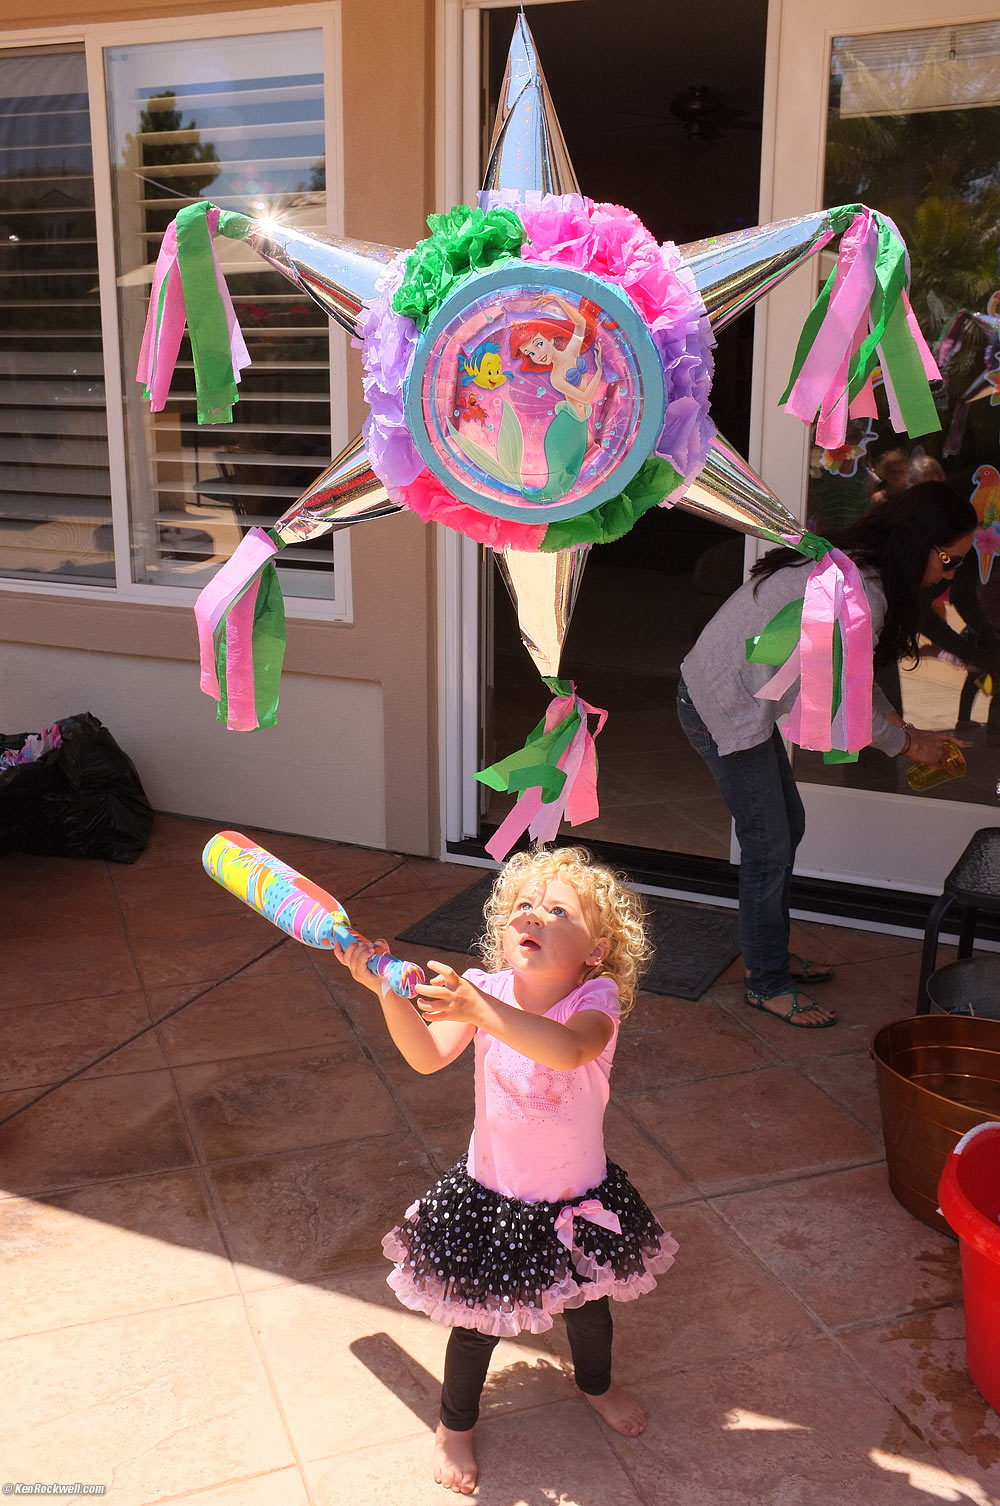 Katie and the Piñata